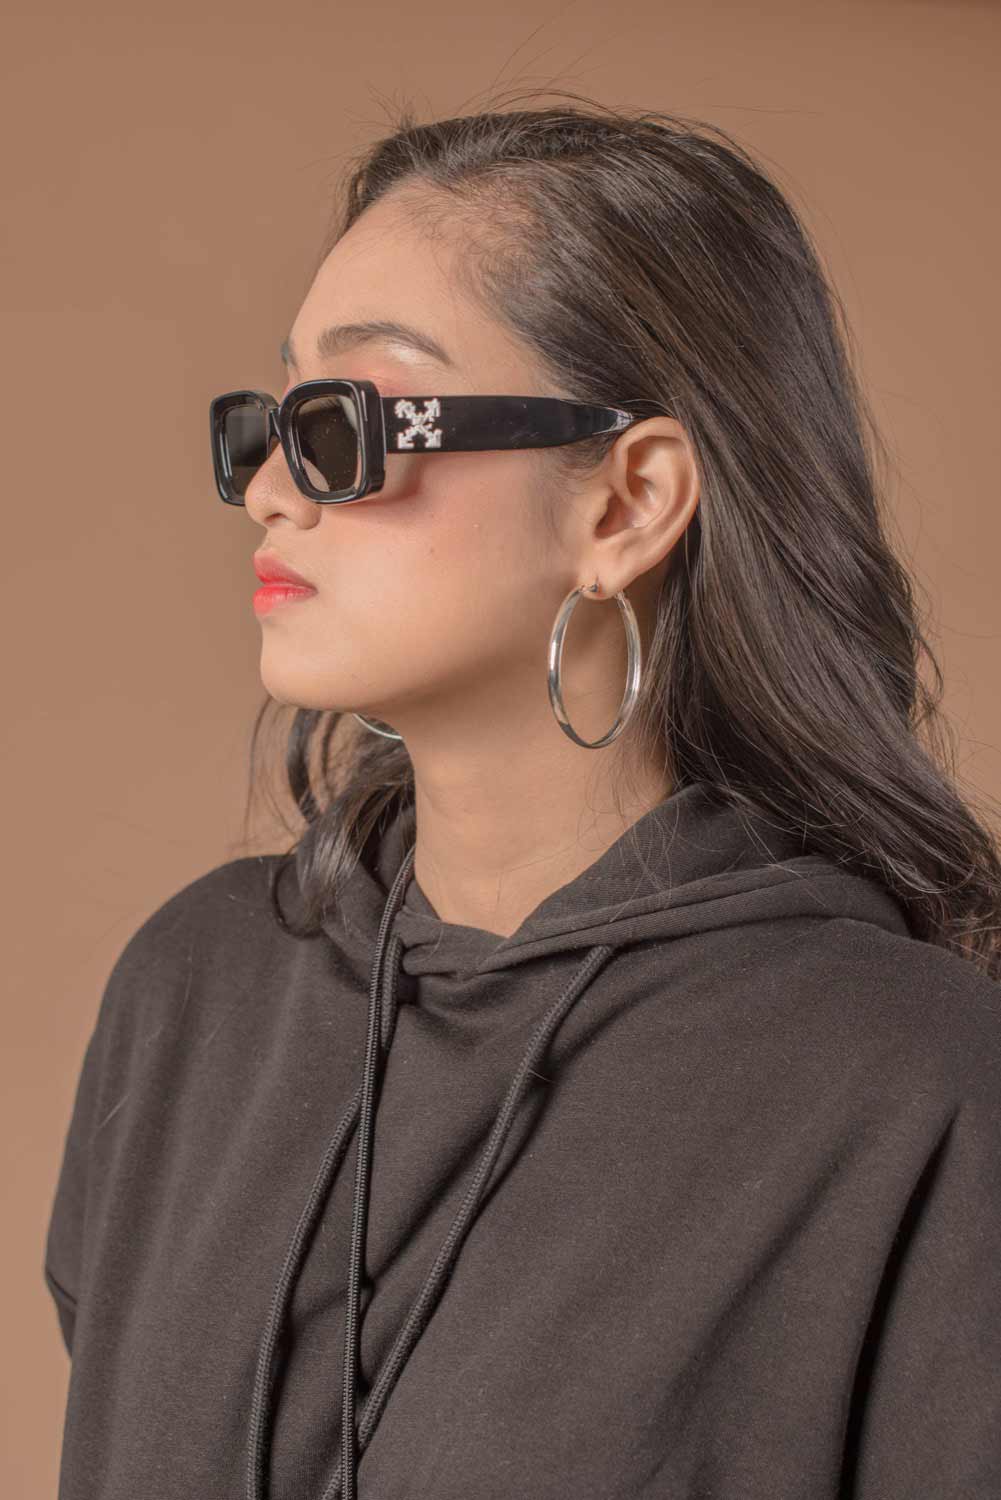 Sunglass Hut x Off-White™ Reveal Sunglasses Line